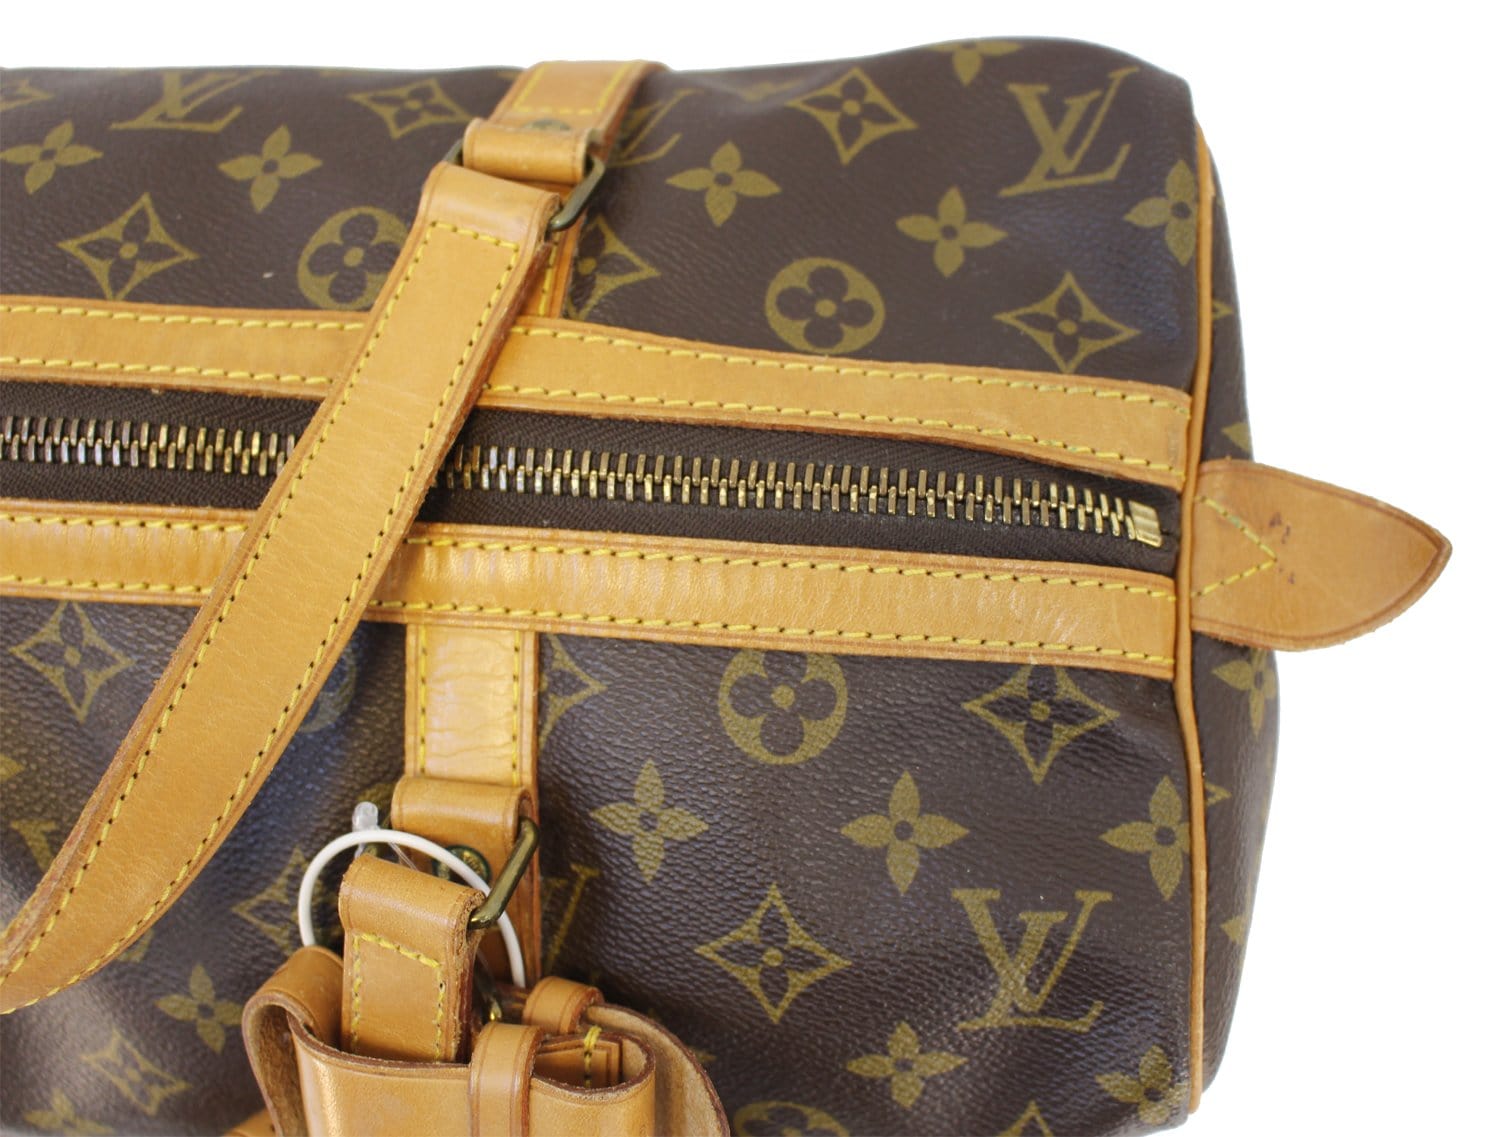 Authentic Louis Vuitton Sac Souple 35 Hand / Travel Bag w/Luggage Tag